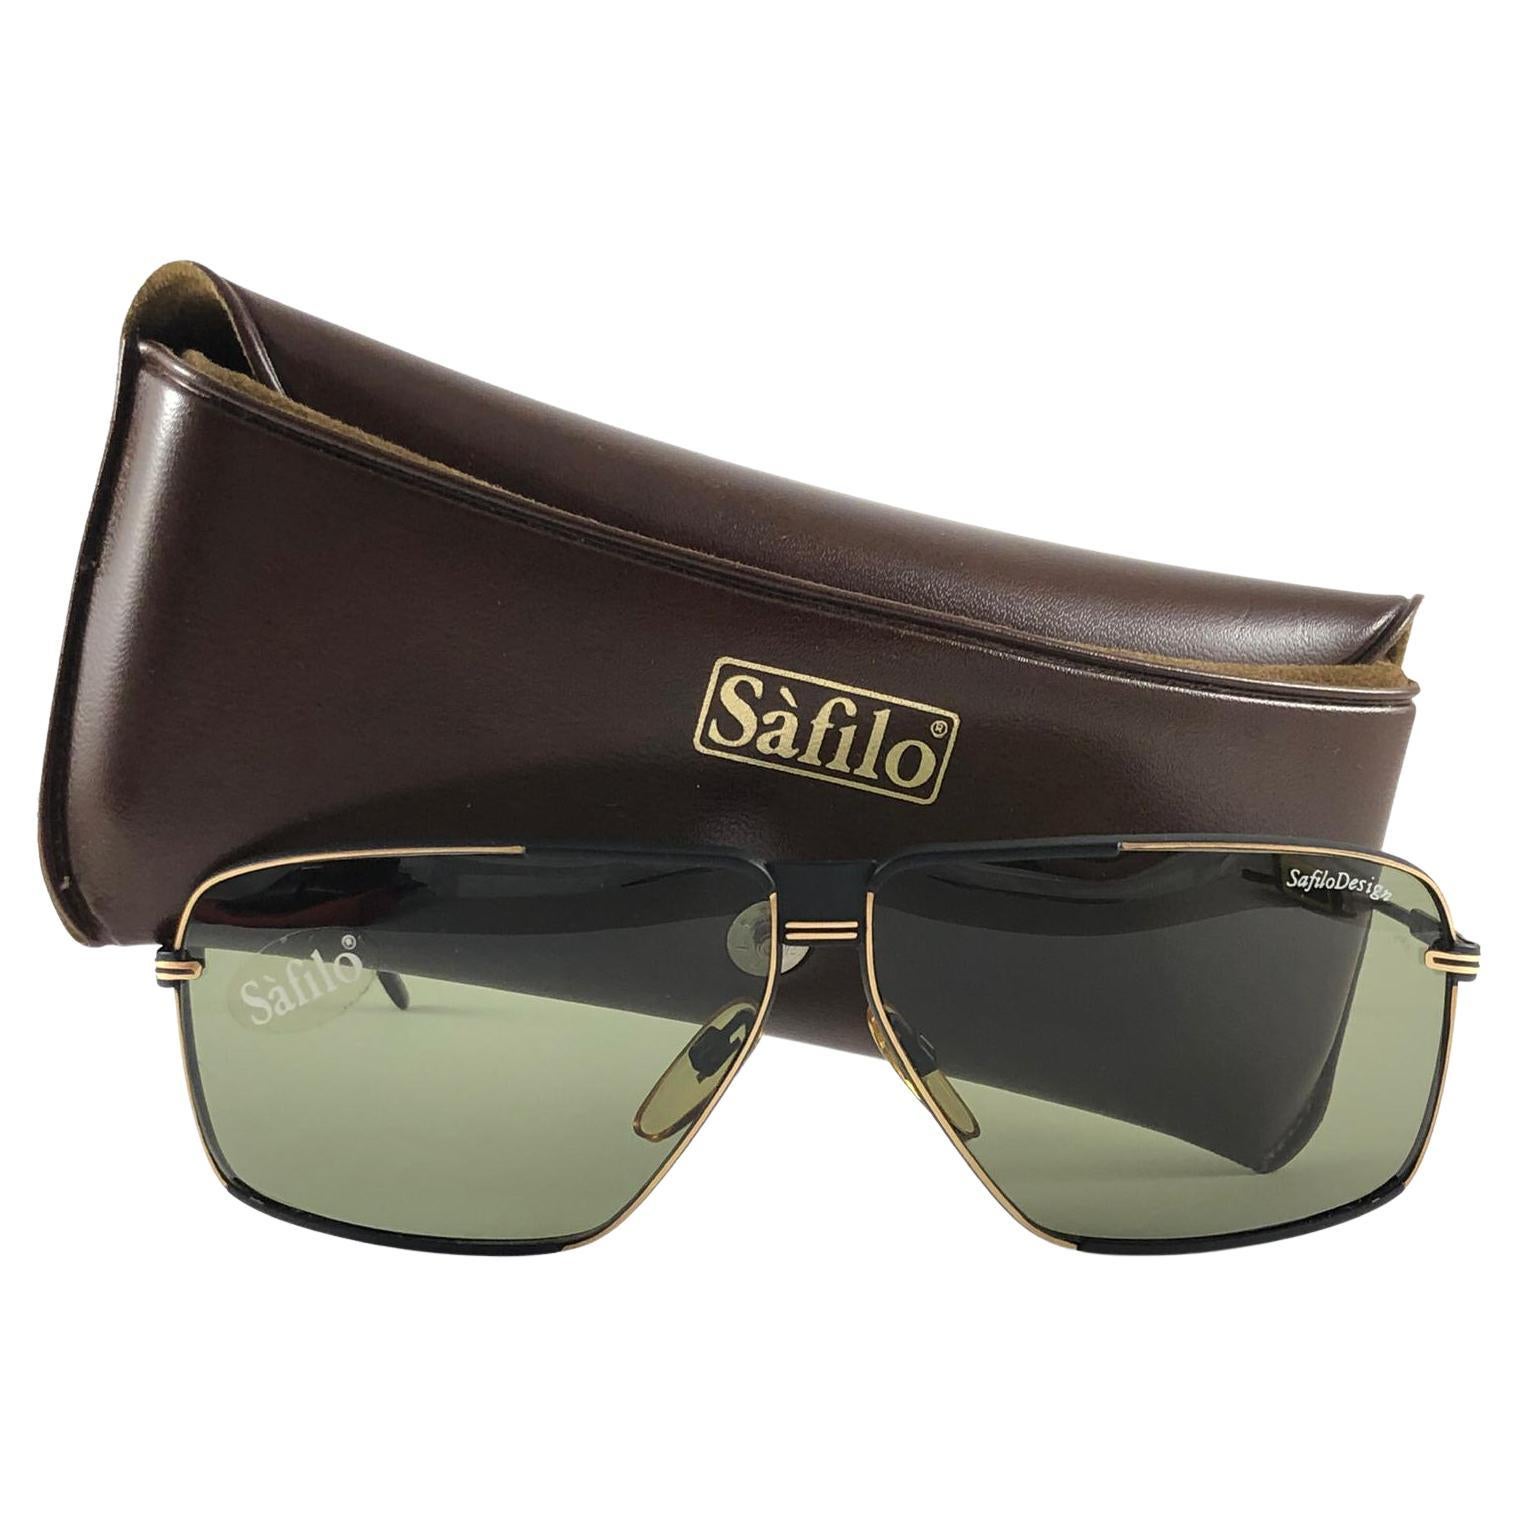 New Vintage Safilo Design 04 Black Mate Aviator 1980's Sunglasses Made in Italy